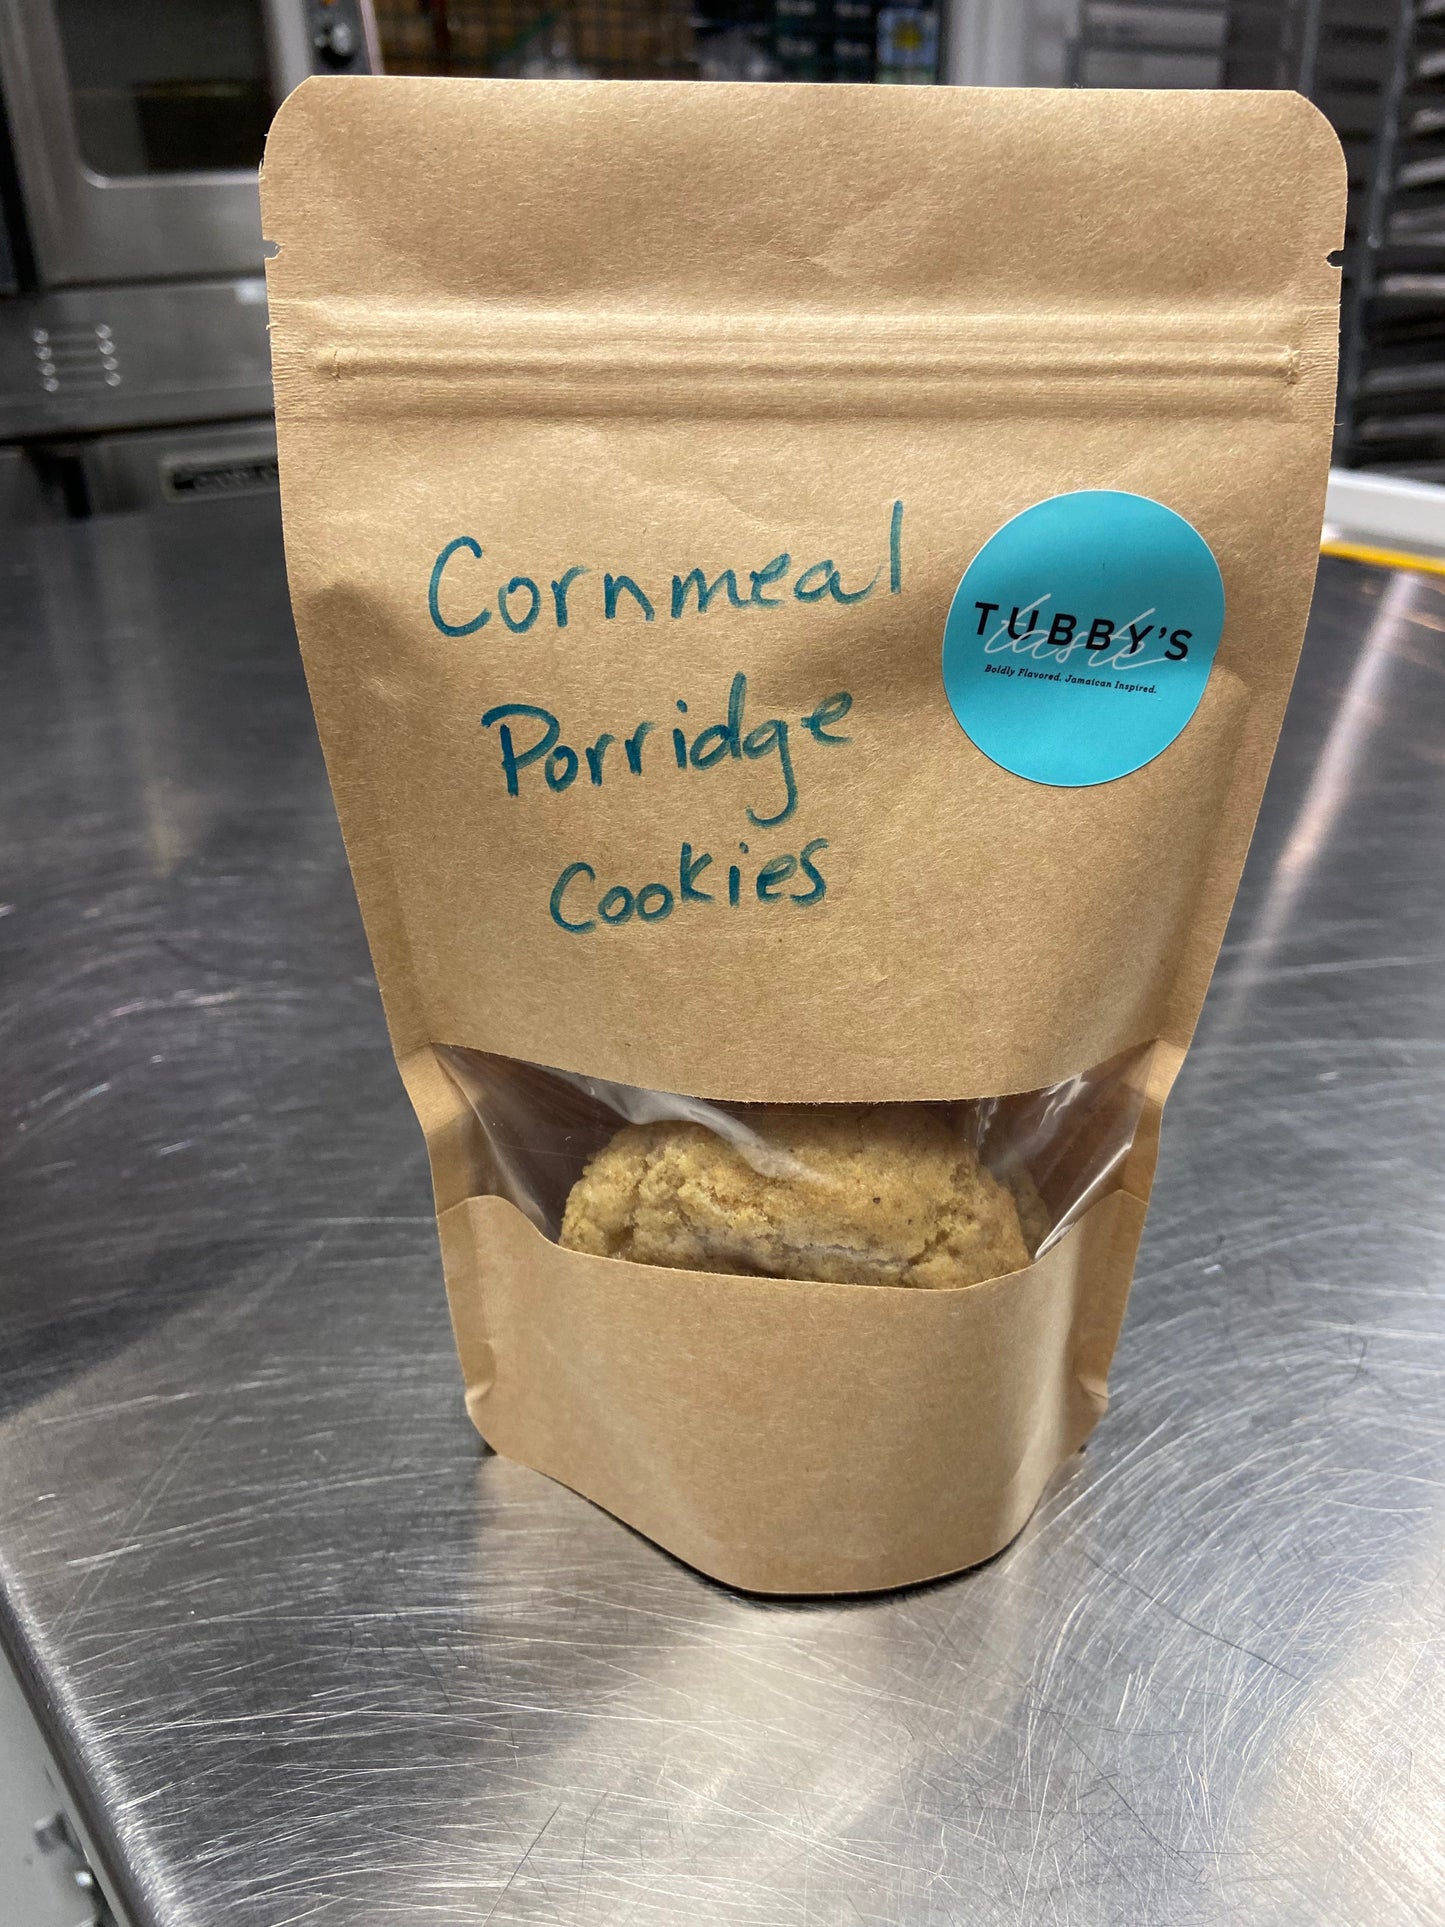 Cornmeal Porridge Cookies